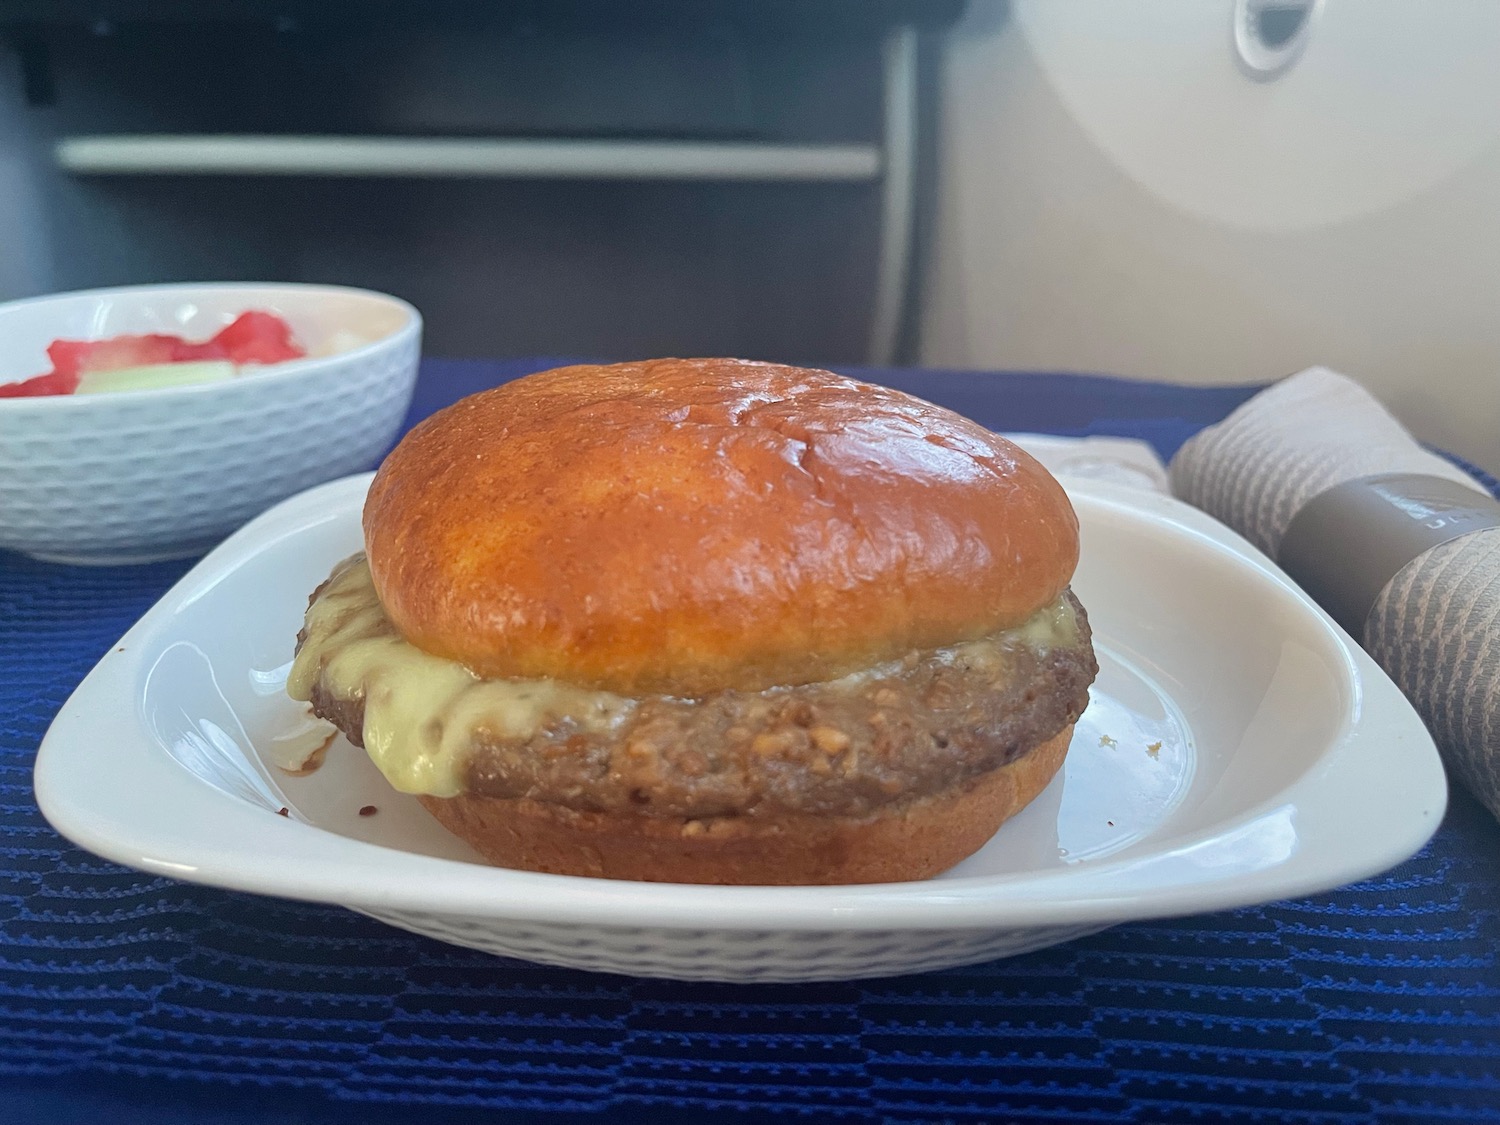 a hamburger on a plate